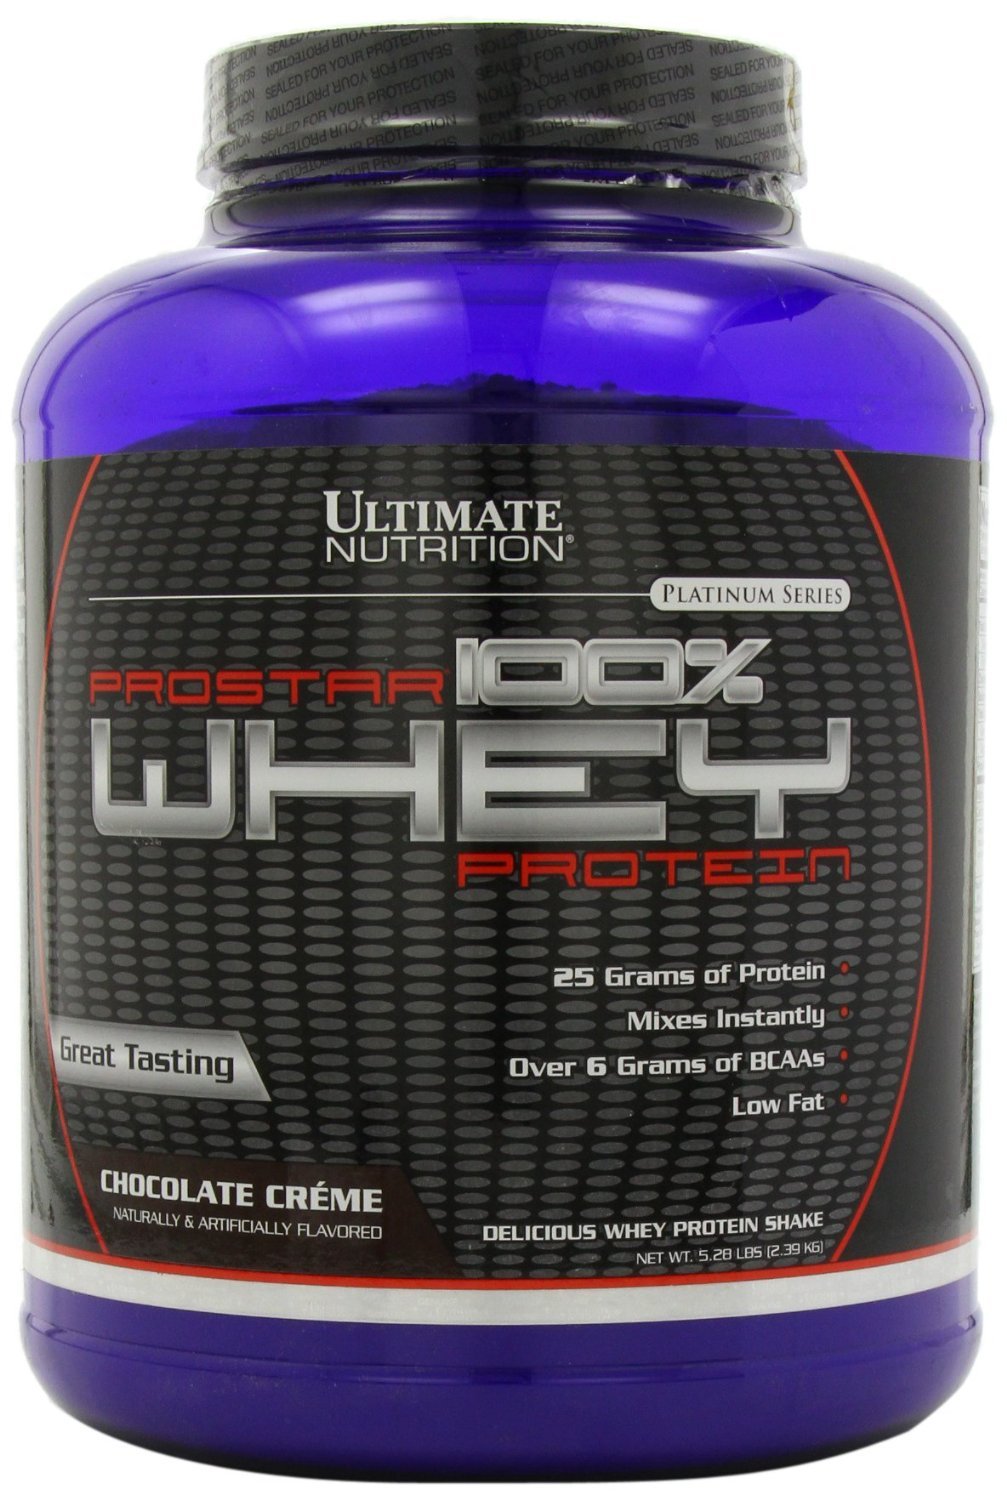 Prostar Whey, 2390 g, Ultimate Nutrition. Suero aislado. Lean muscle mass Weight Loss recuperación Anti-catabolic properties 